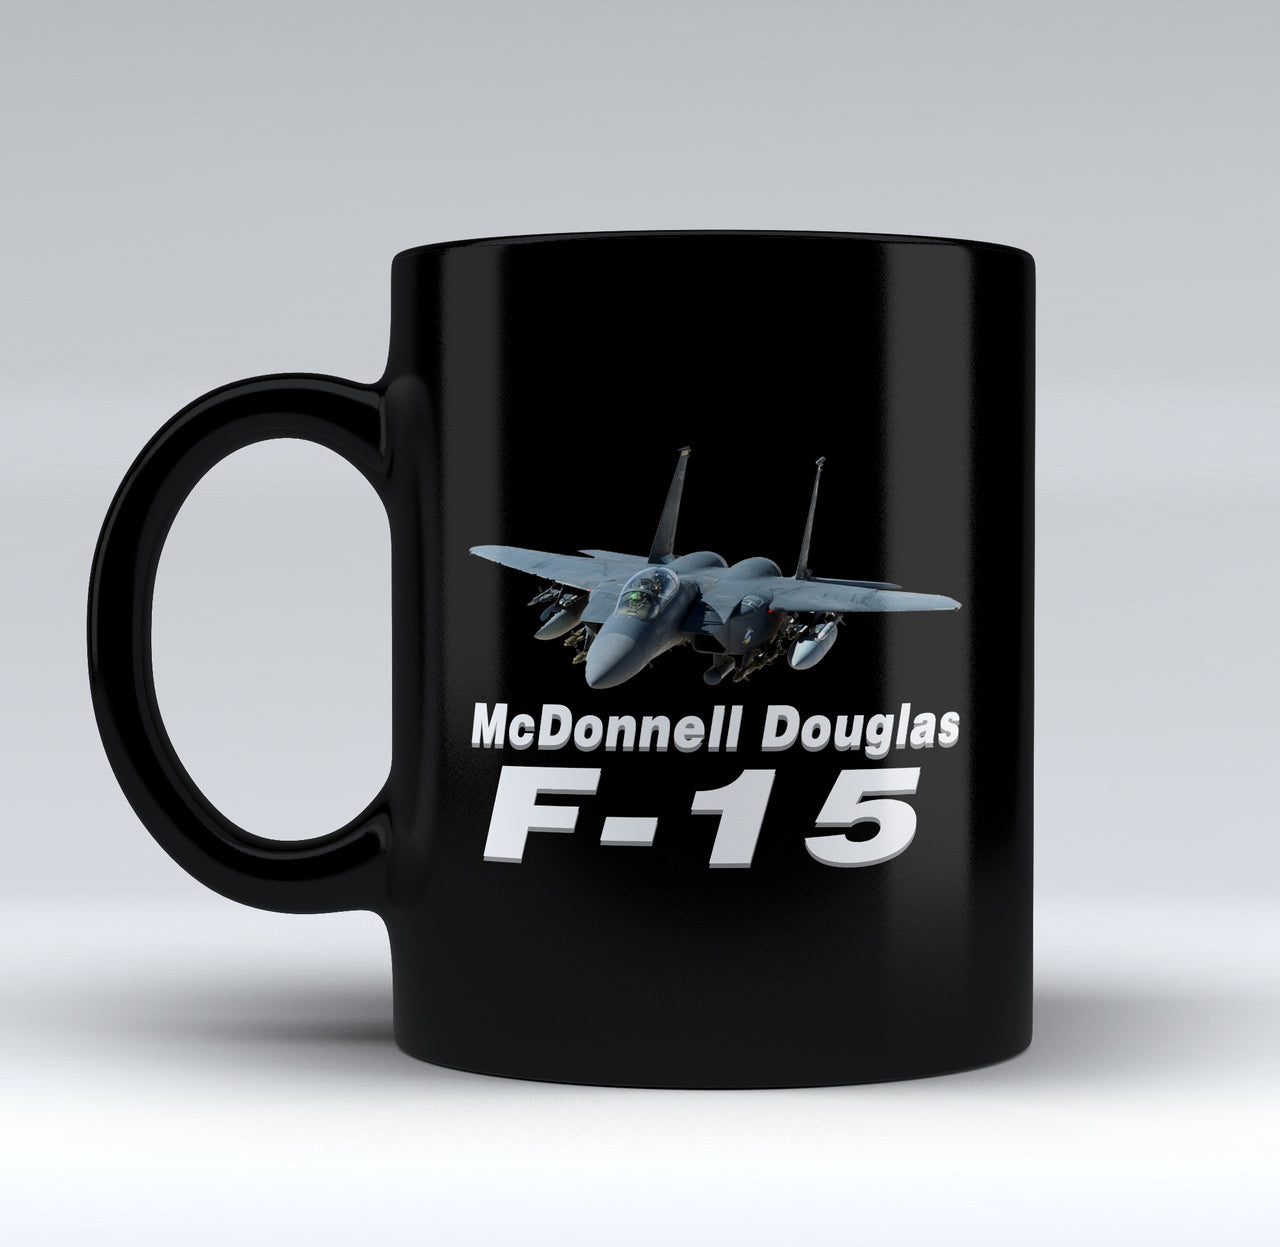 The McDonnell Douglas F15 Designed Black Mugs